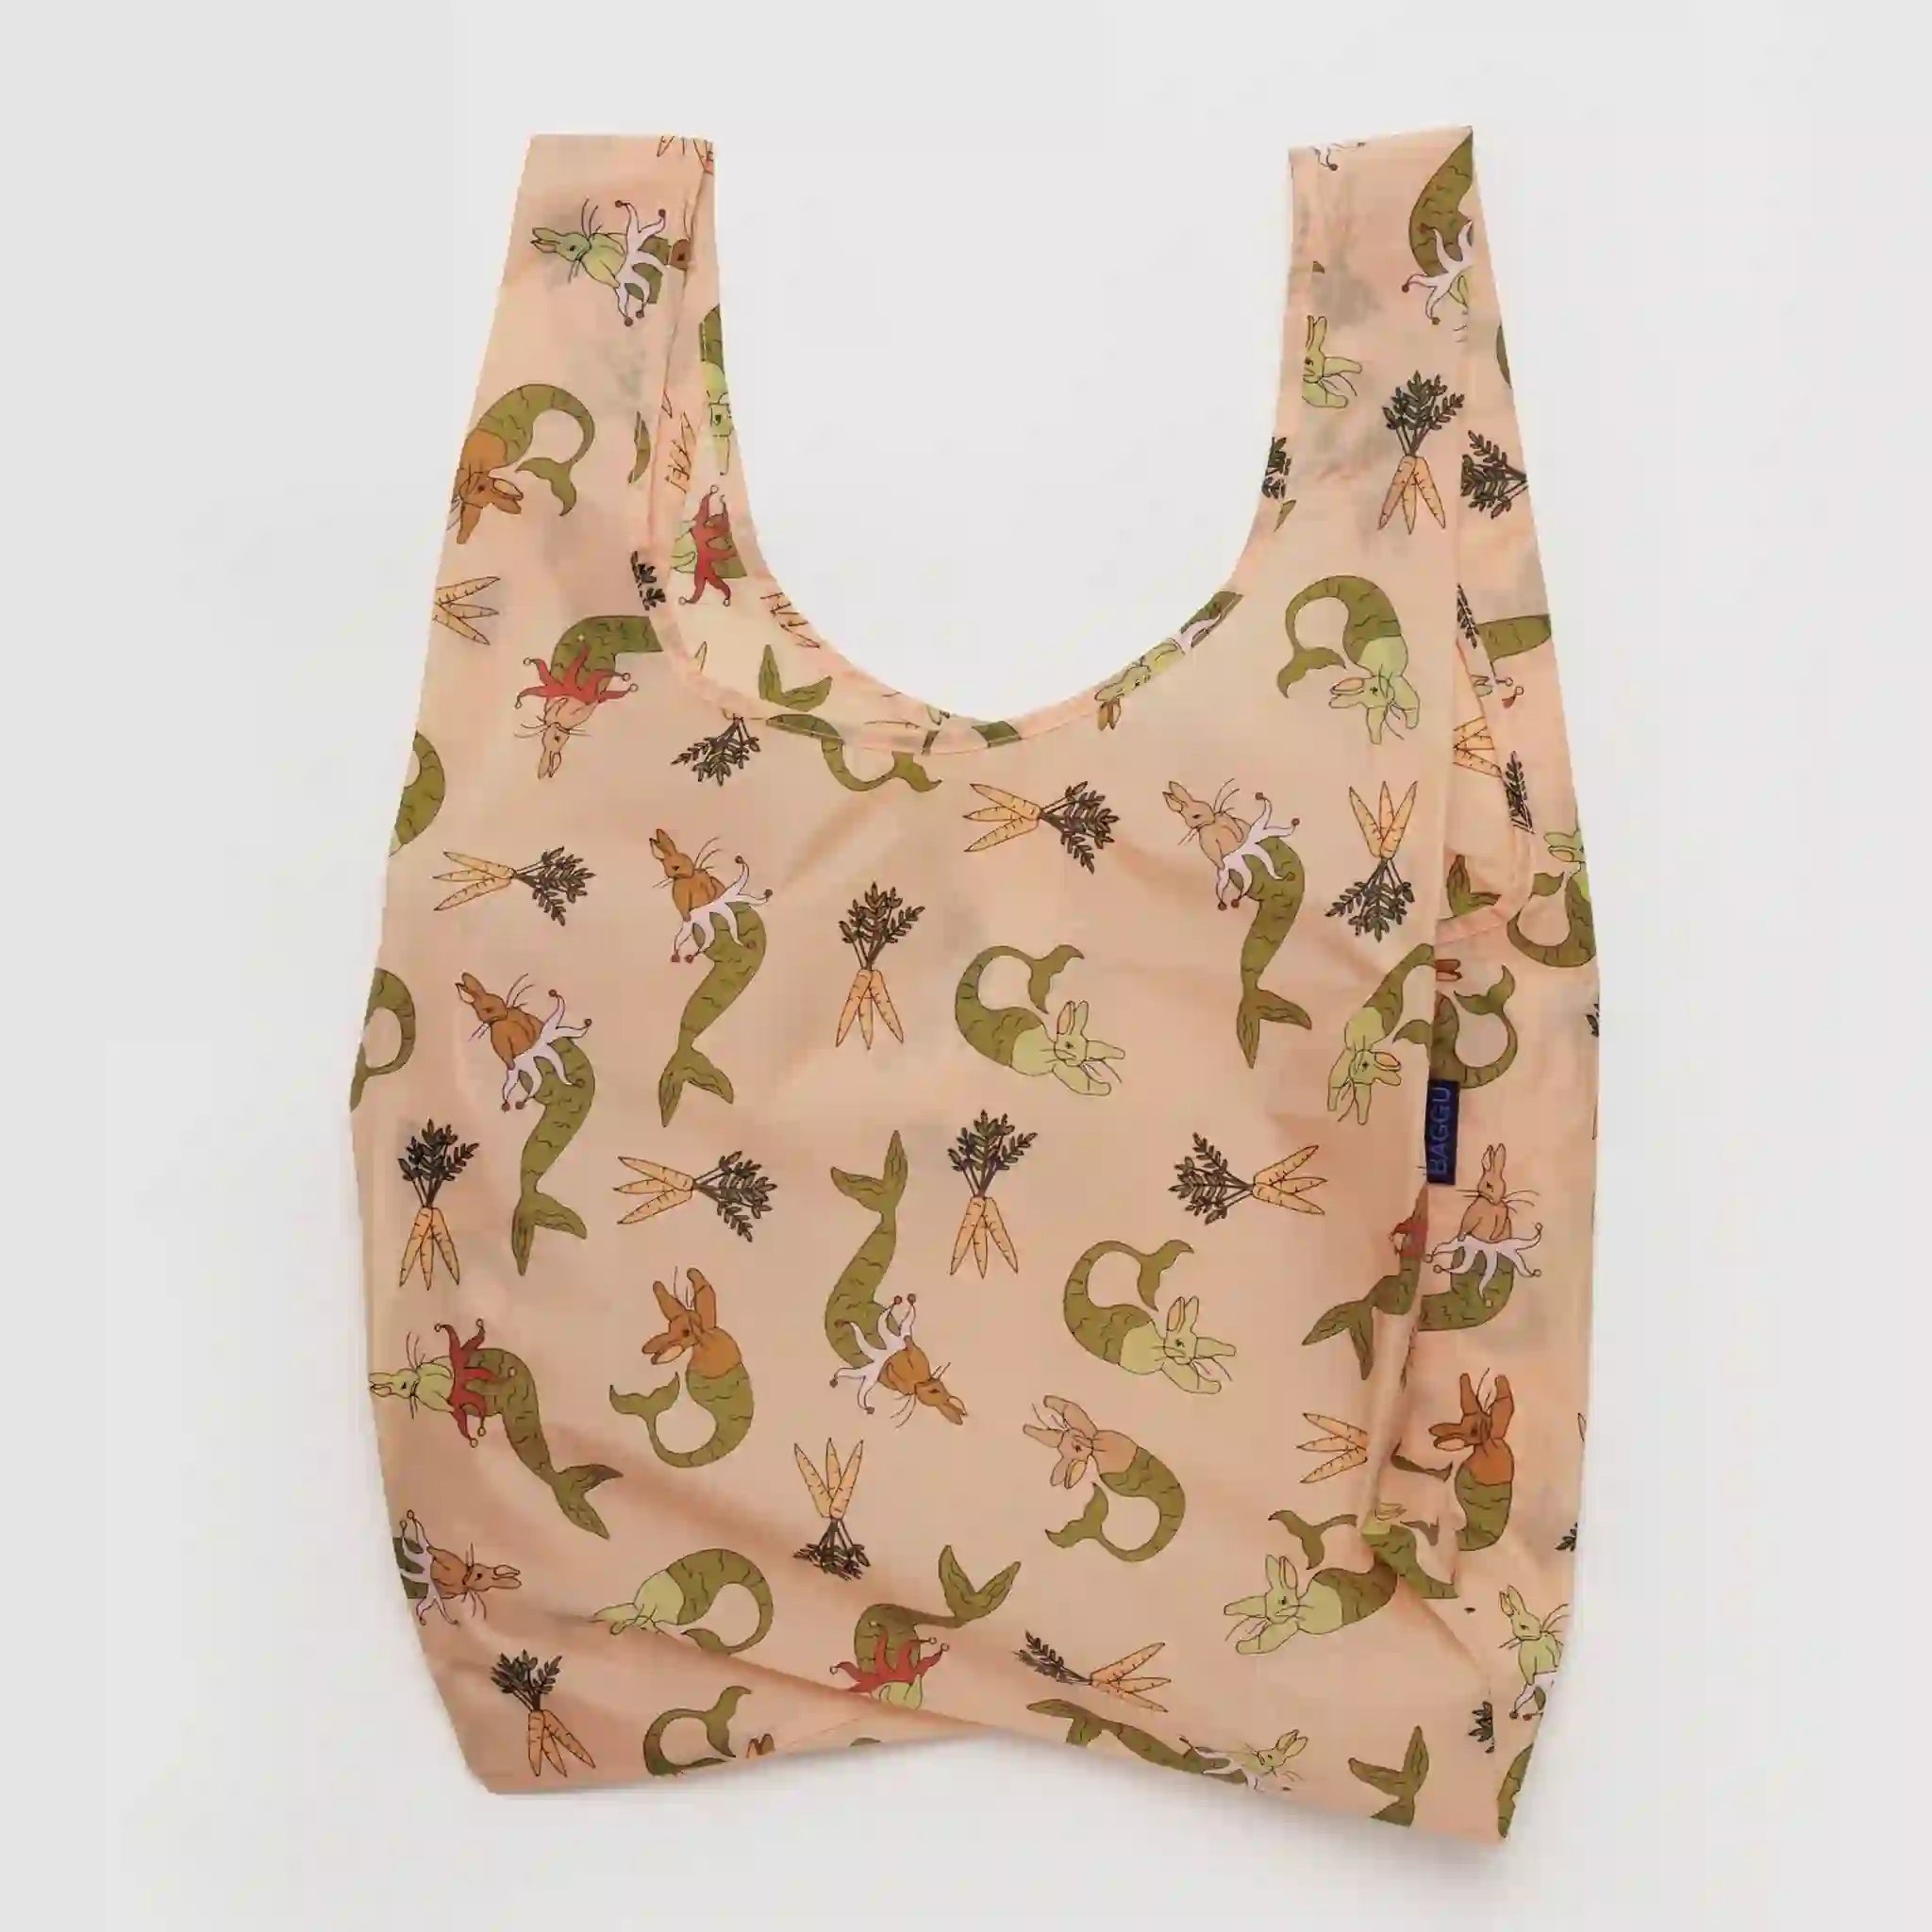 A tan nylon bag with a mermaid bunny print all over. 